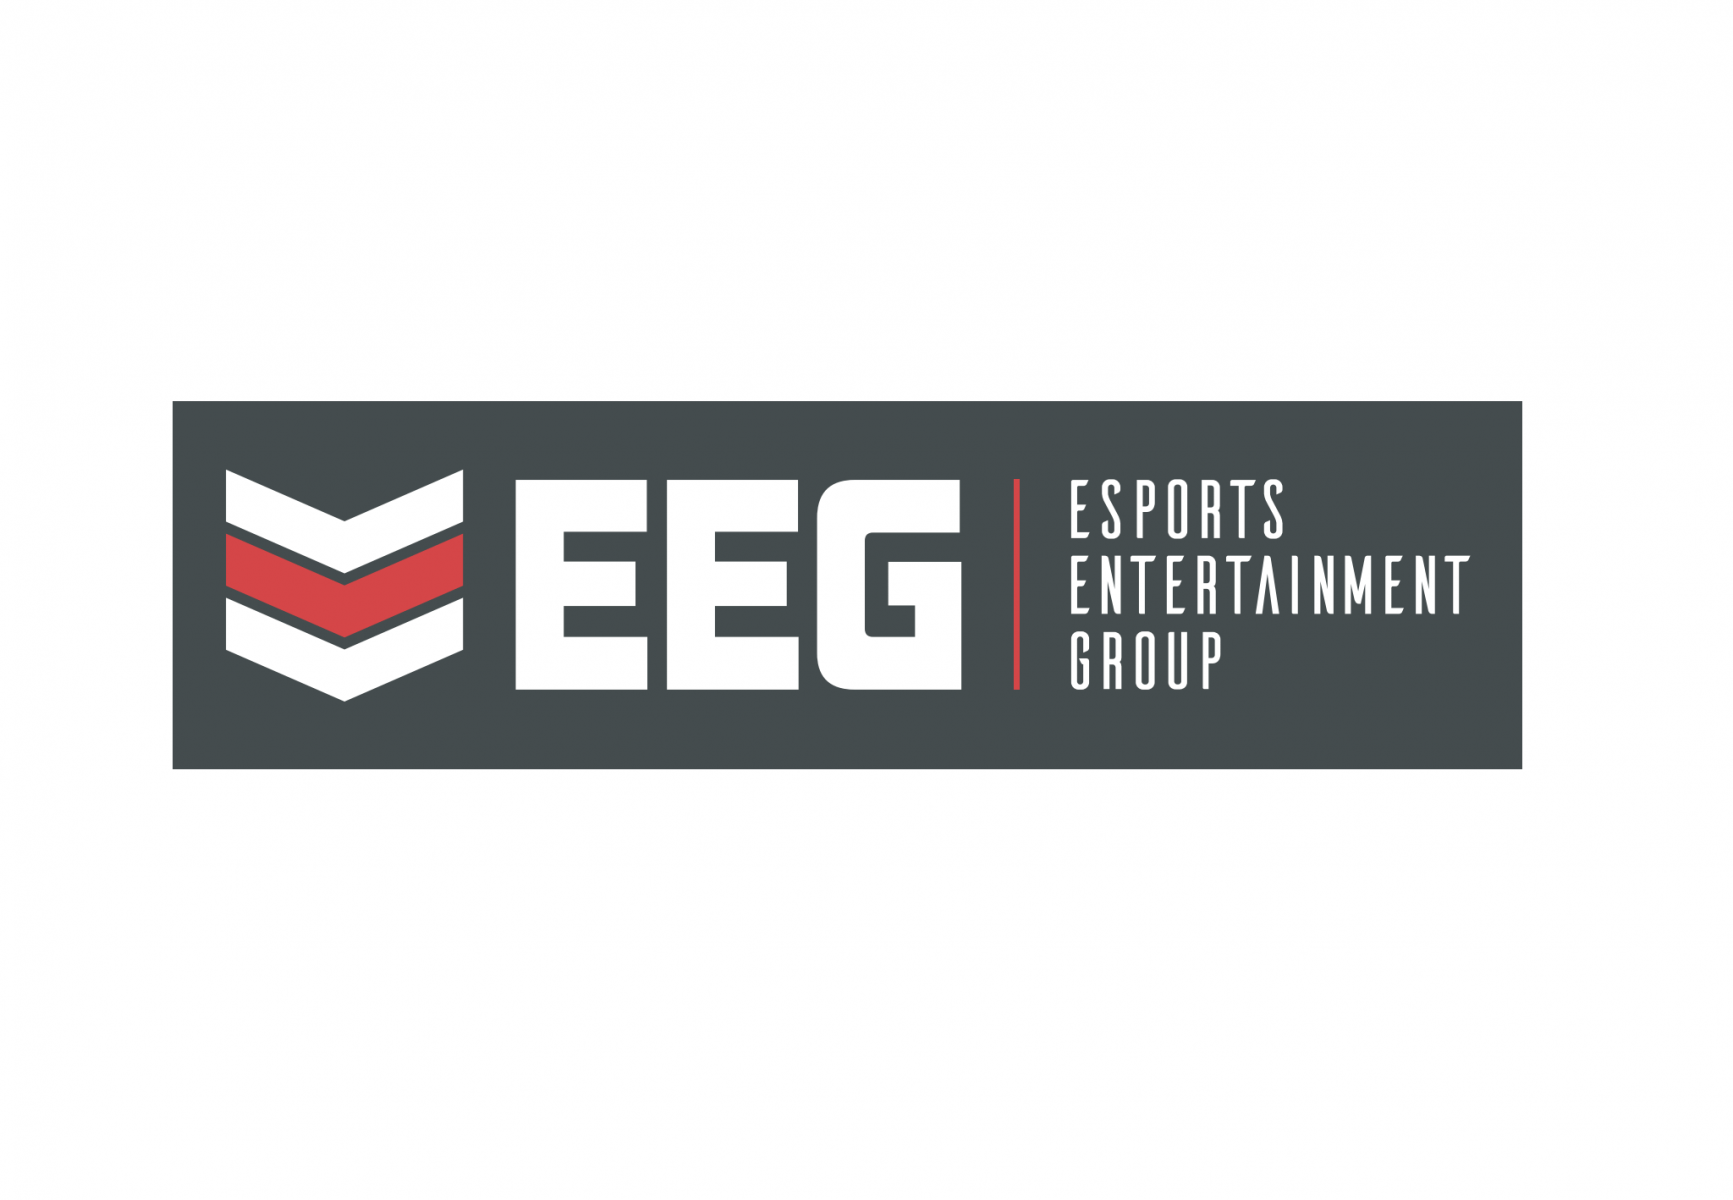 Esports Entertainment Group 2021 6138e8757fec3 